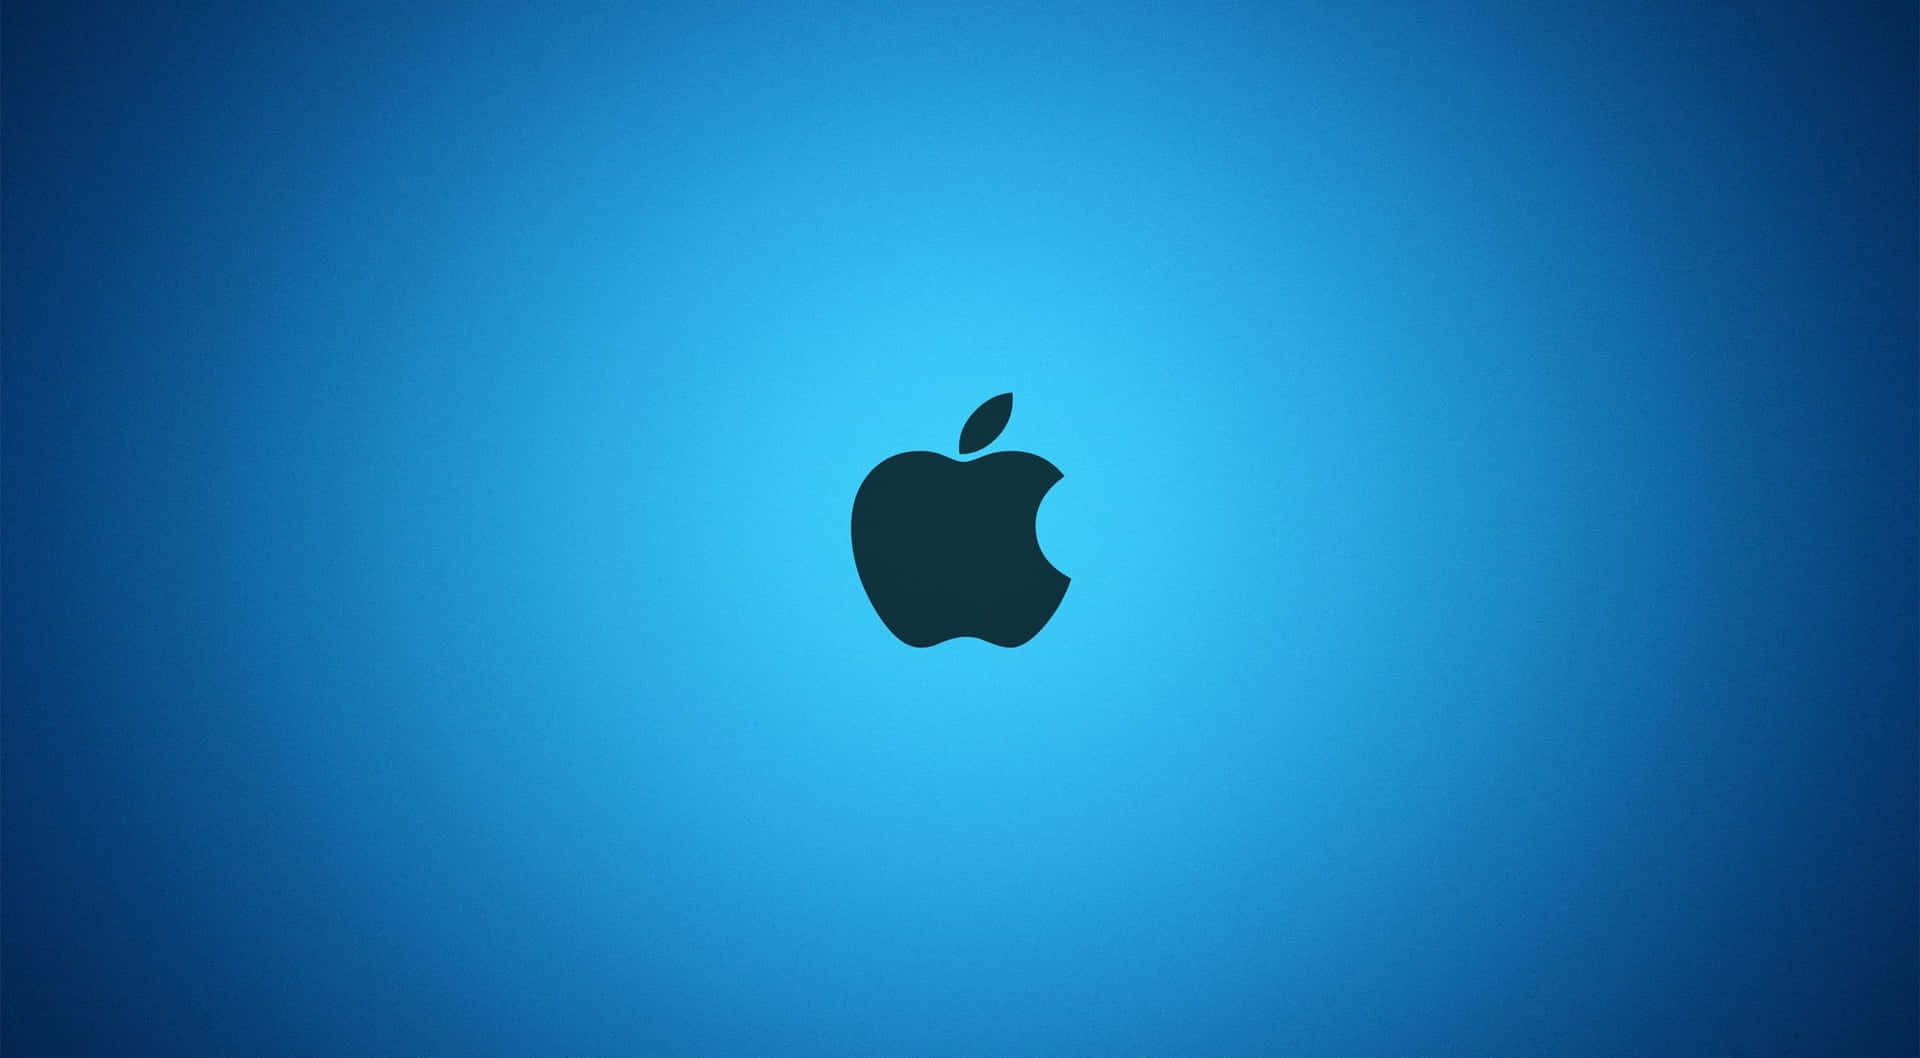 "Crystal Clear Apple Logo in High Definition"